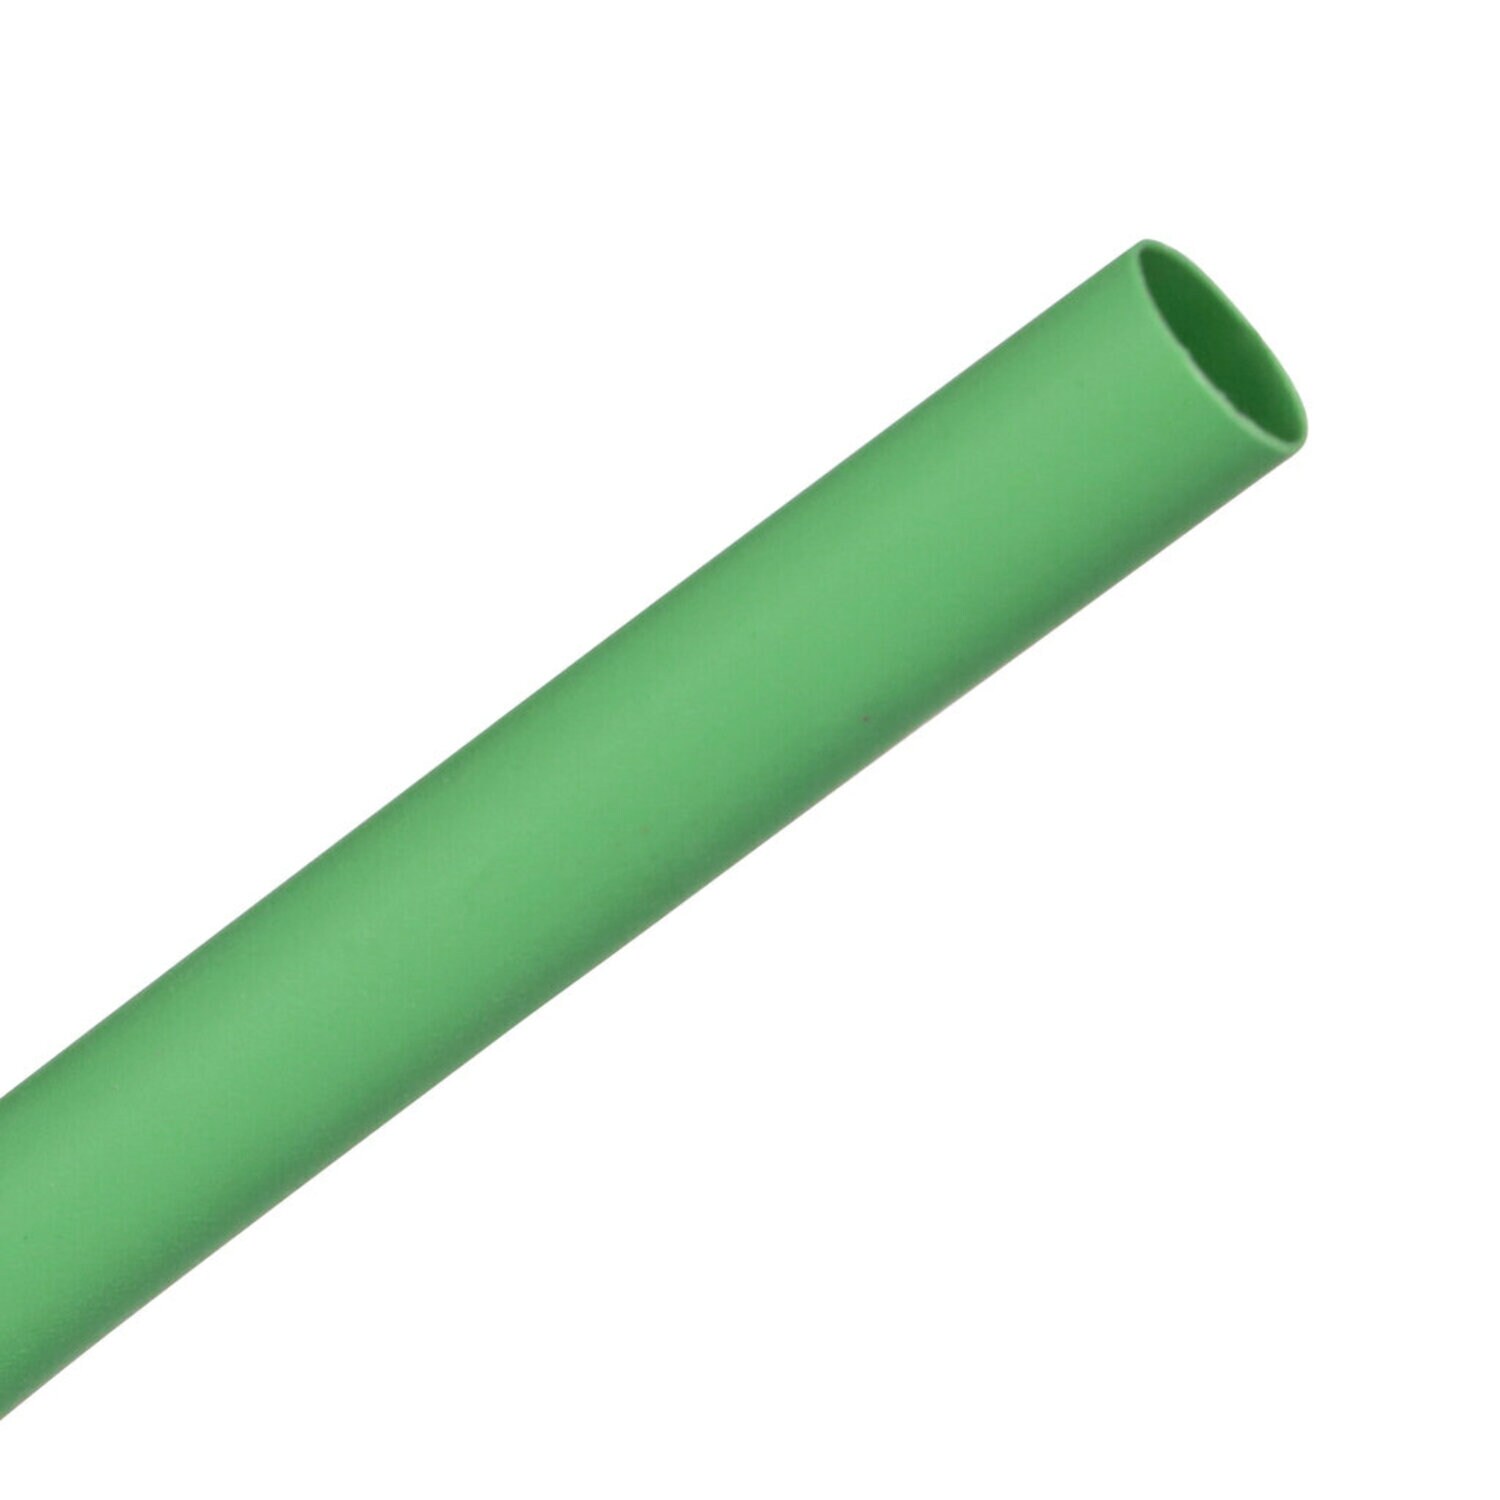 7100029961 - 3M Heat Shrink Thin-Wall Tubing FP-301-1/4-Green-200`: 200 ft spool
length, 600 ft/case